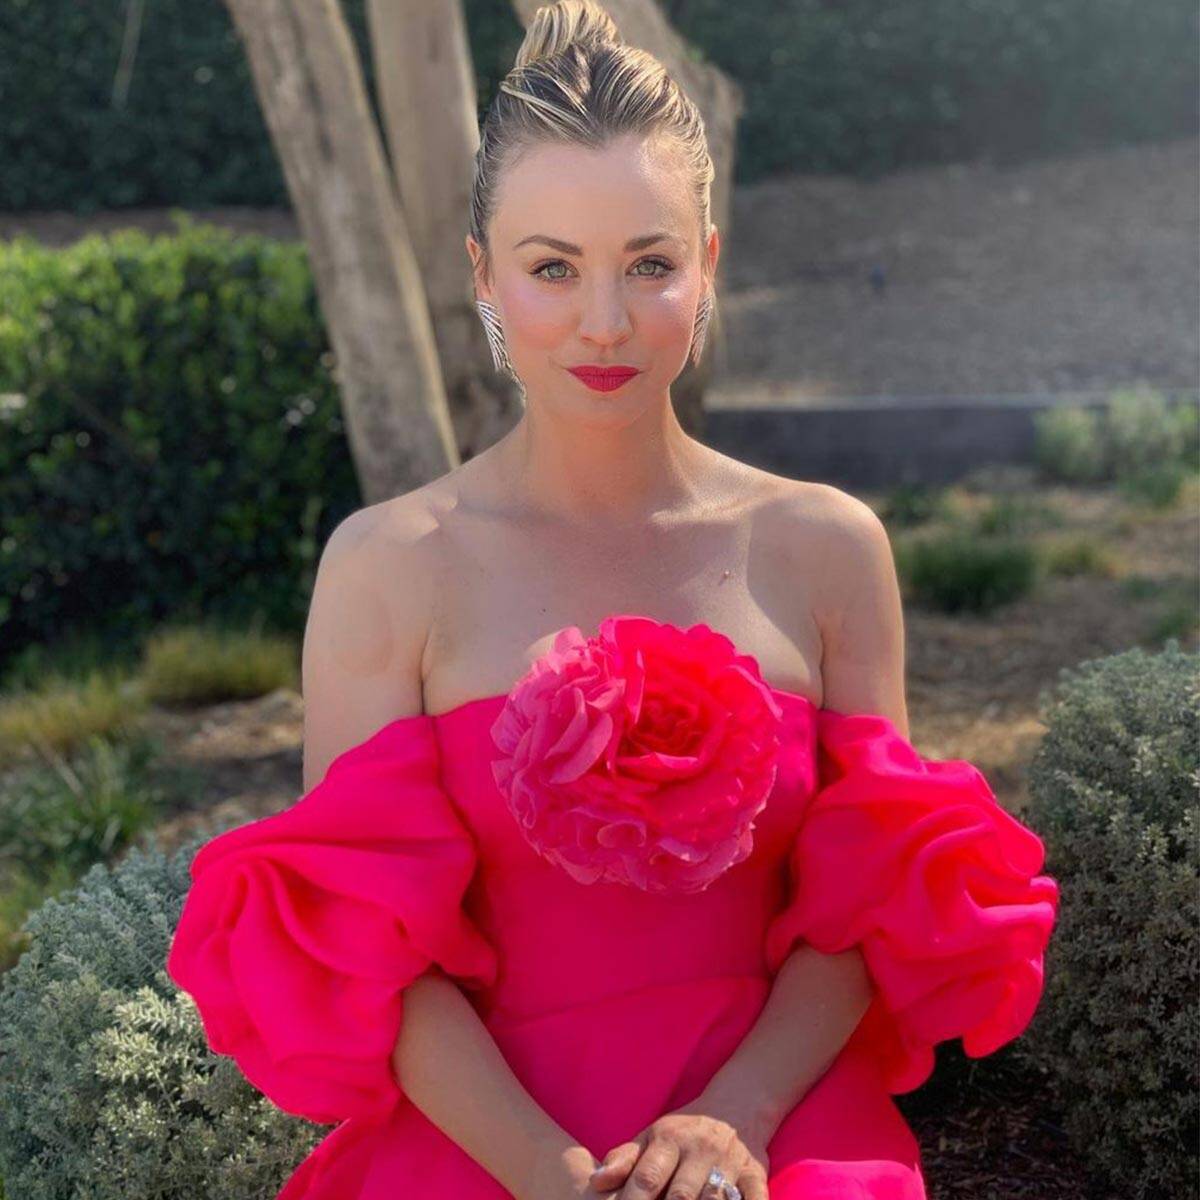 Kaley Cuoco, Jurnee Smollett and More Stars Wear Electrifying Pink Dresses at the 2021 SAG Awards